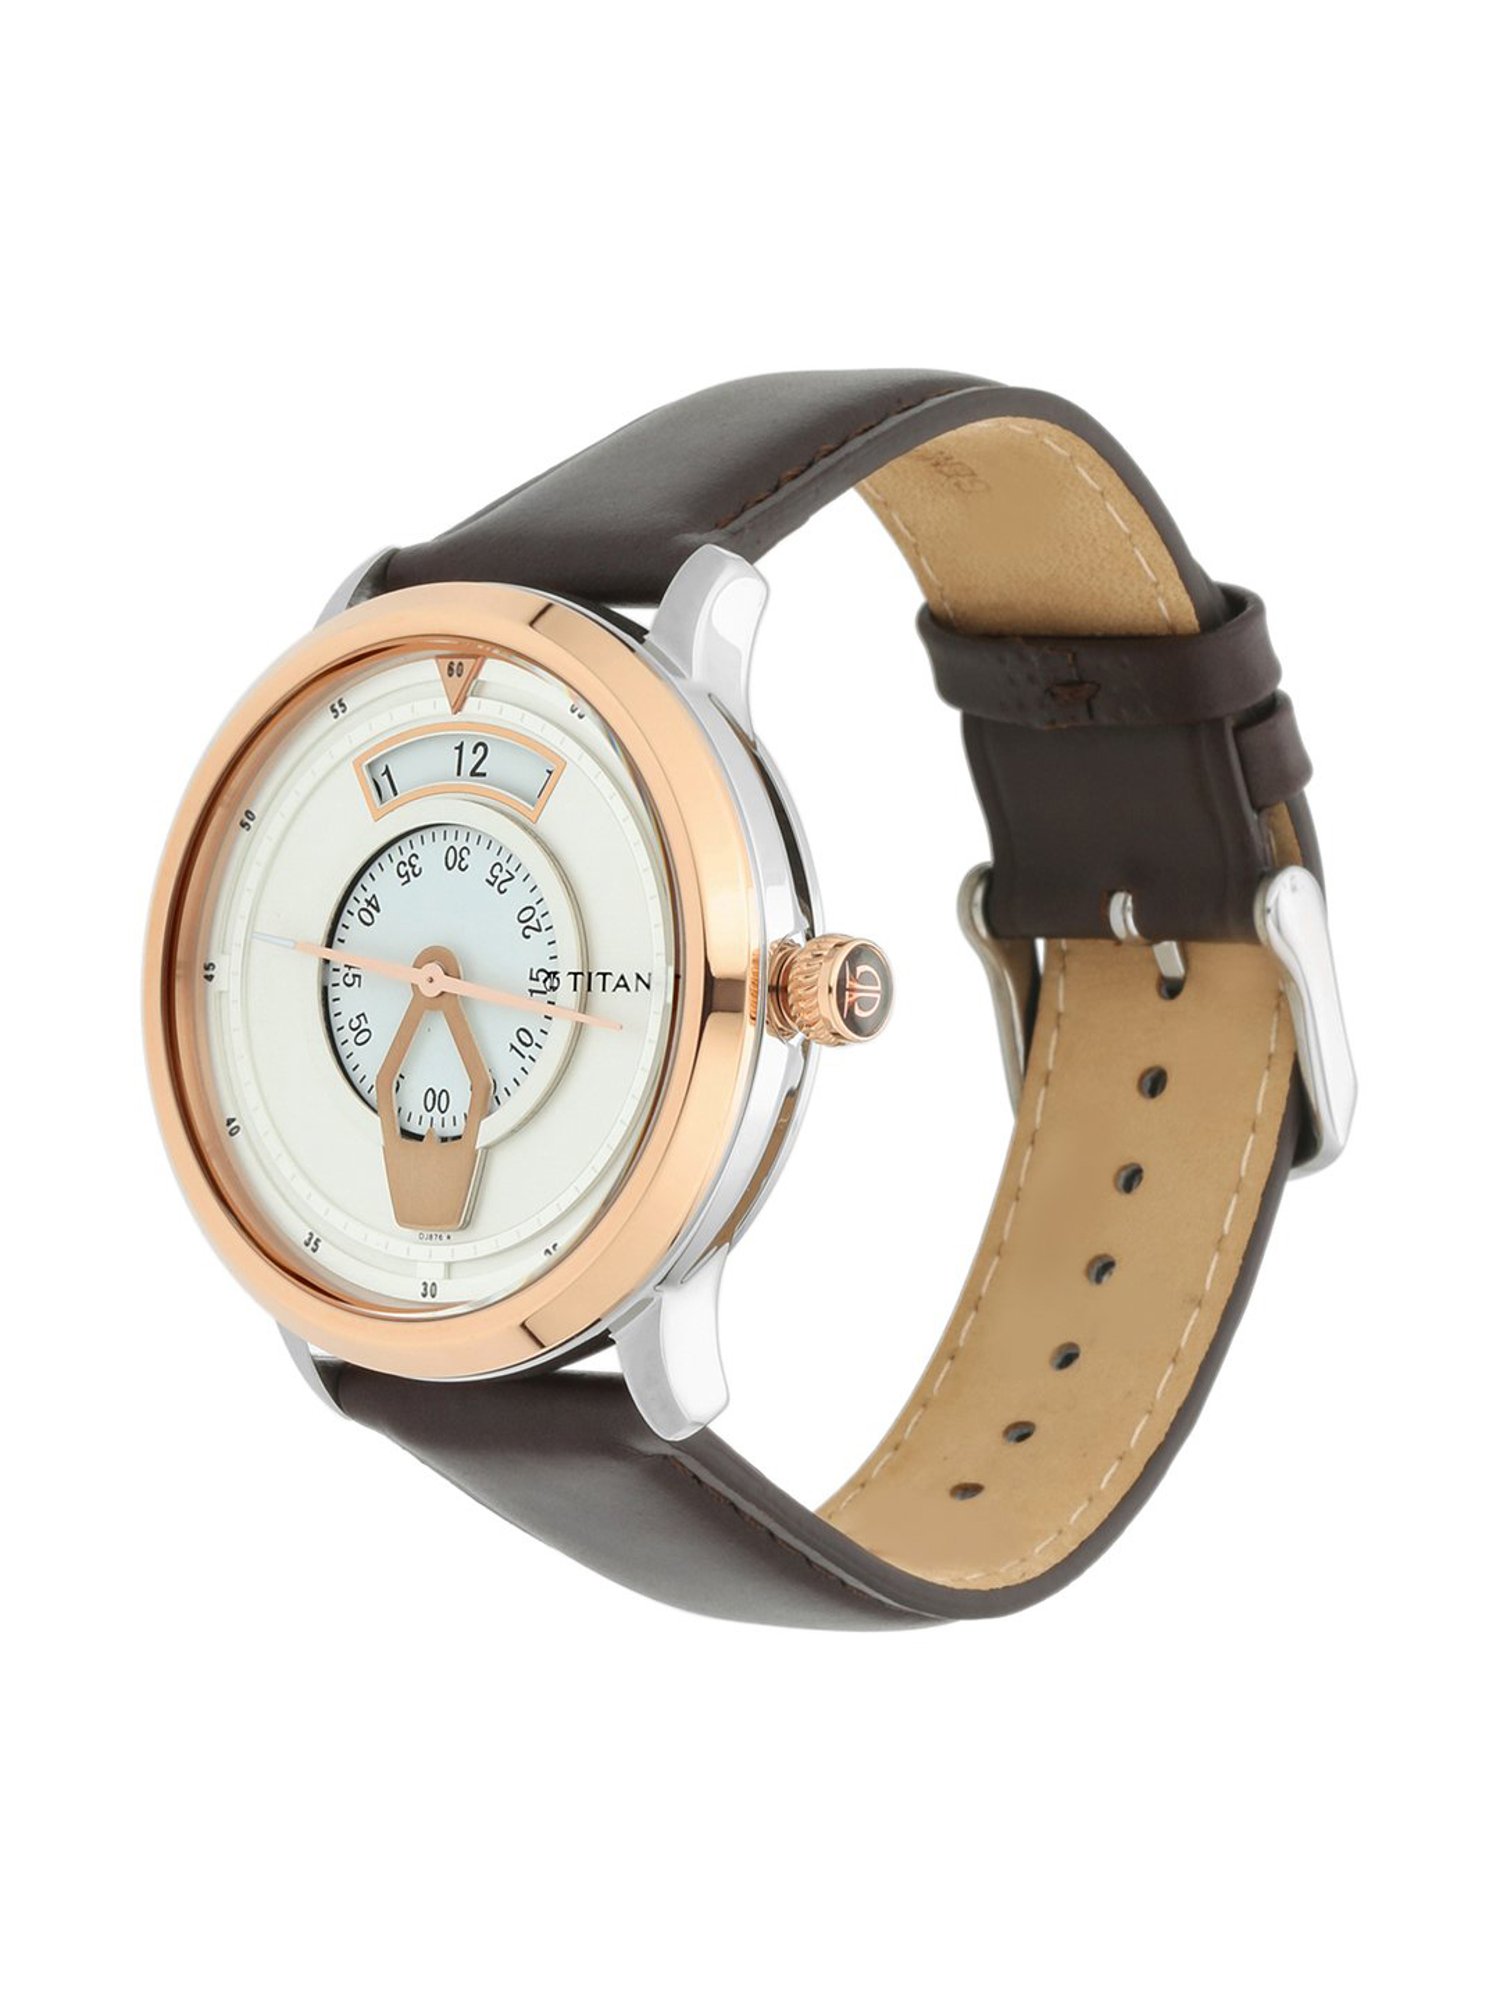 Titan Analog Watch For Men -NR1830KL01 White Dial, Genuine Leather, Green  Strap : Amazon.in: Fashion